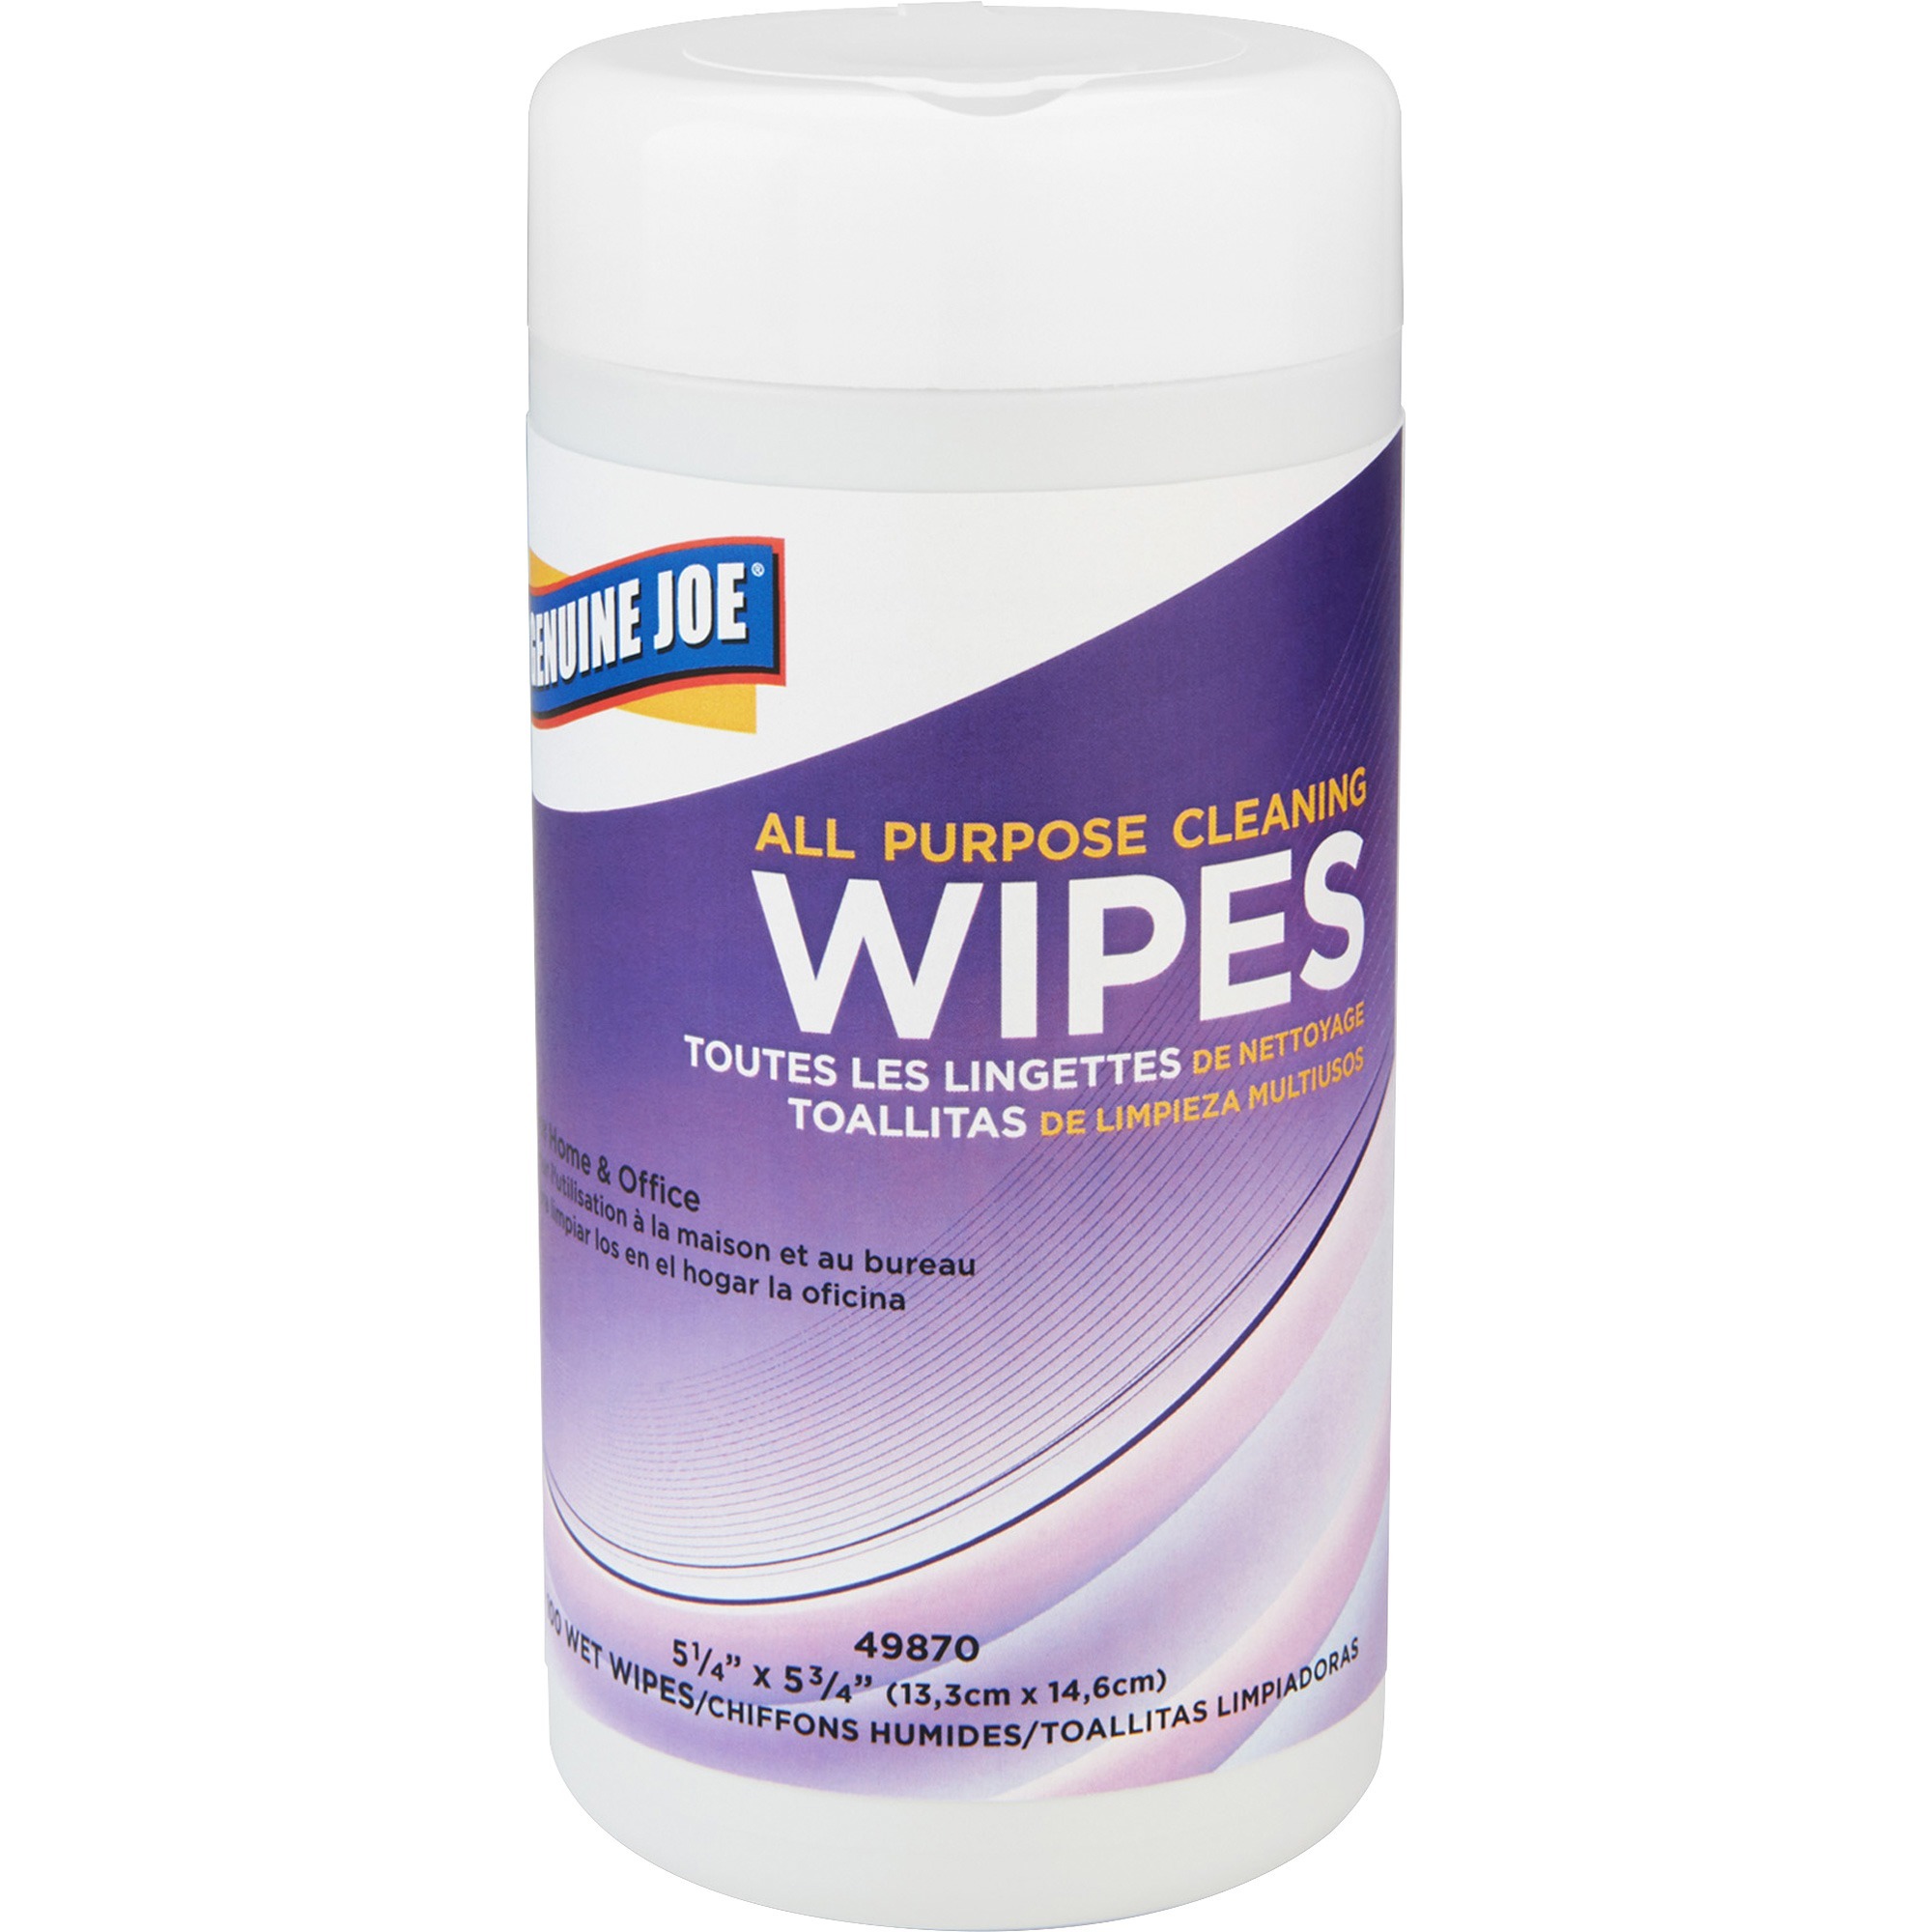 Genuine Joe All Purpose Cleaning Wipes